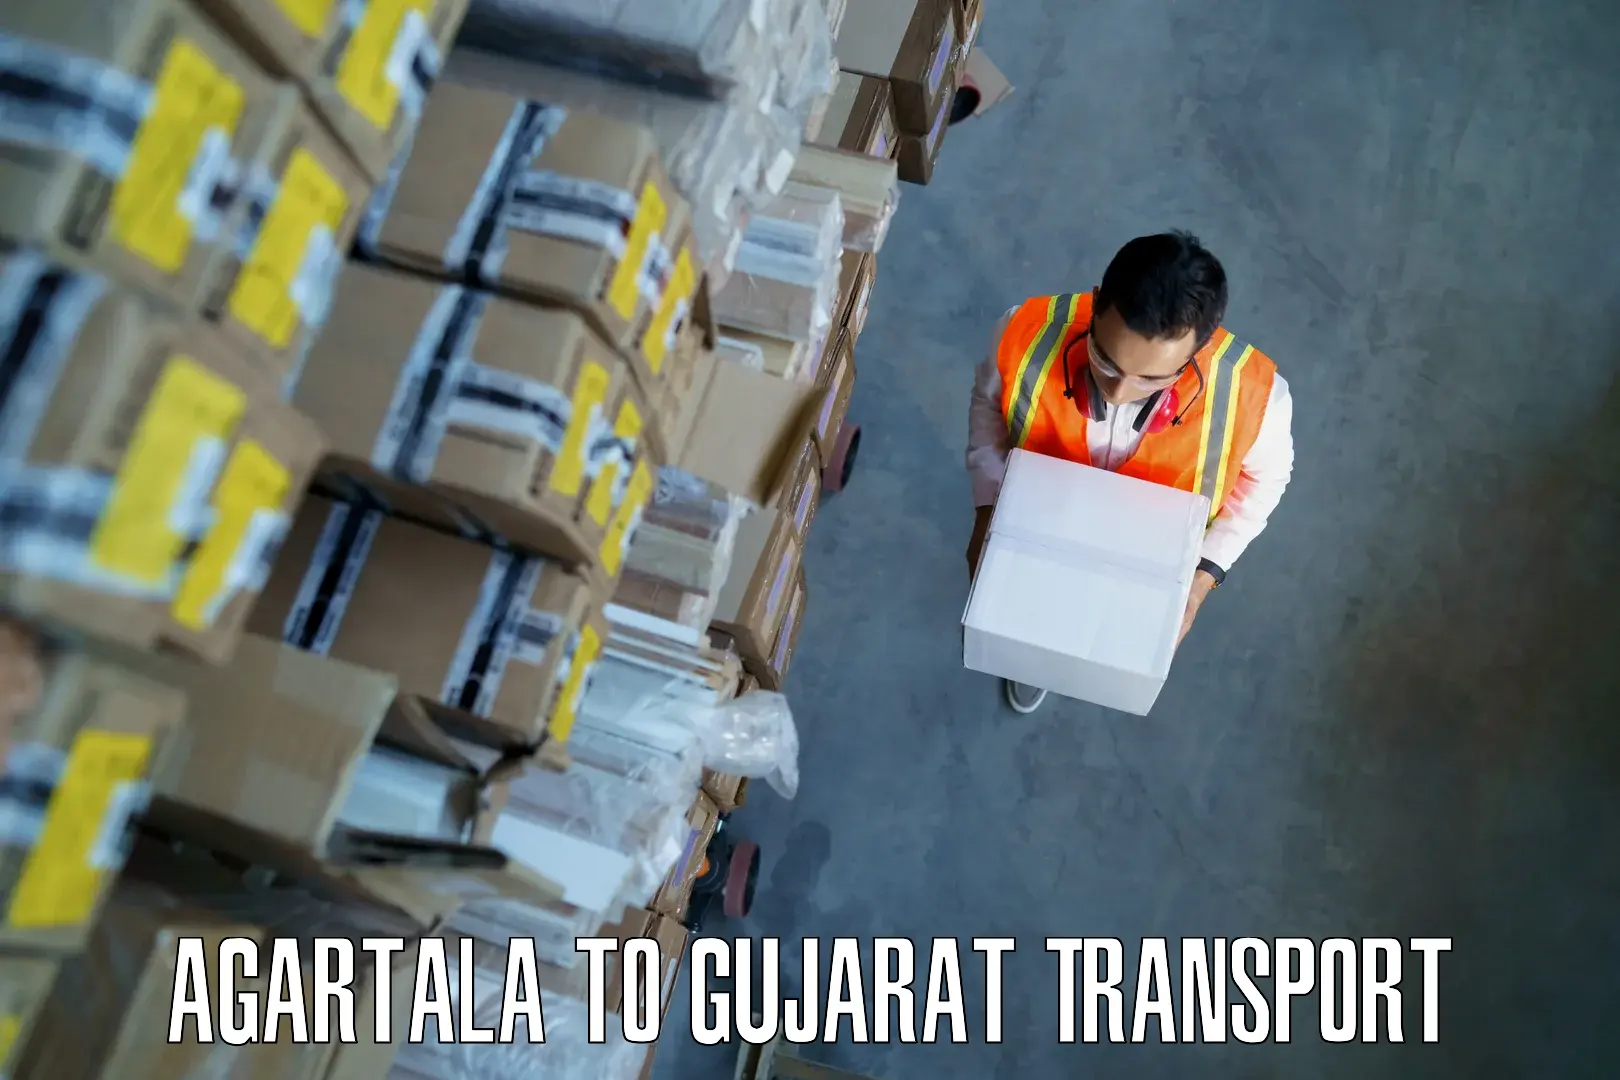 Furniture transport service Agartala to Gujarat